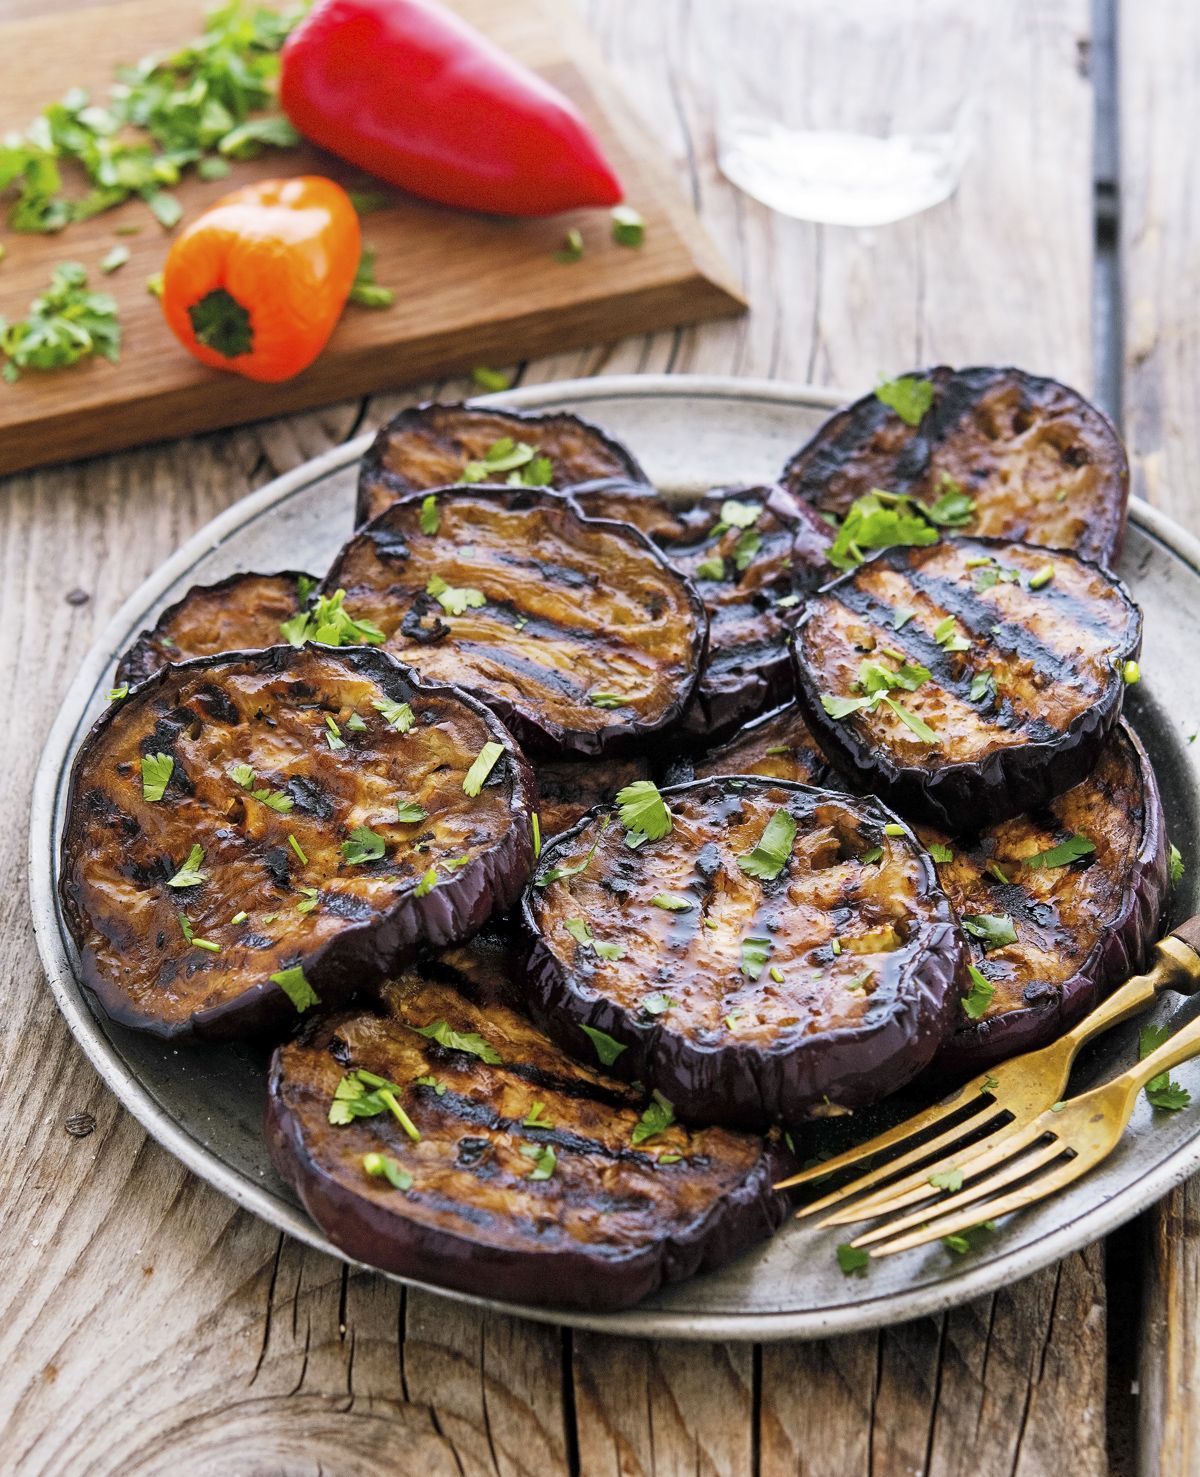 24 marinated eggplant recipes
 ideas